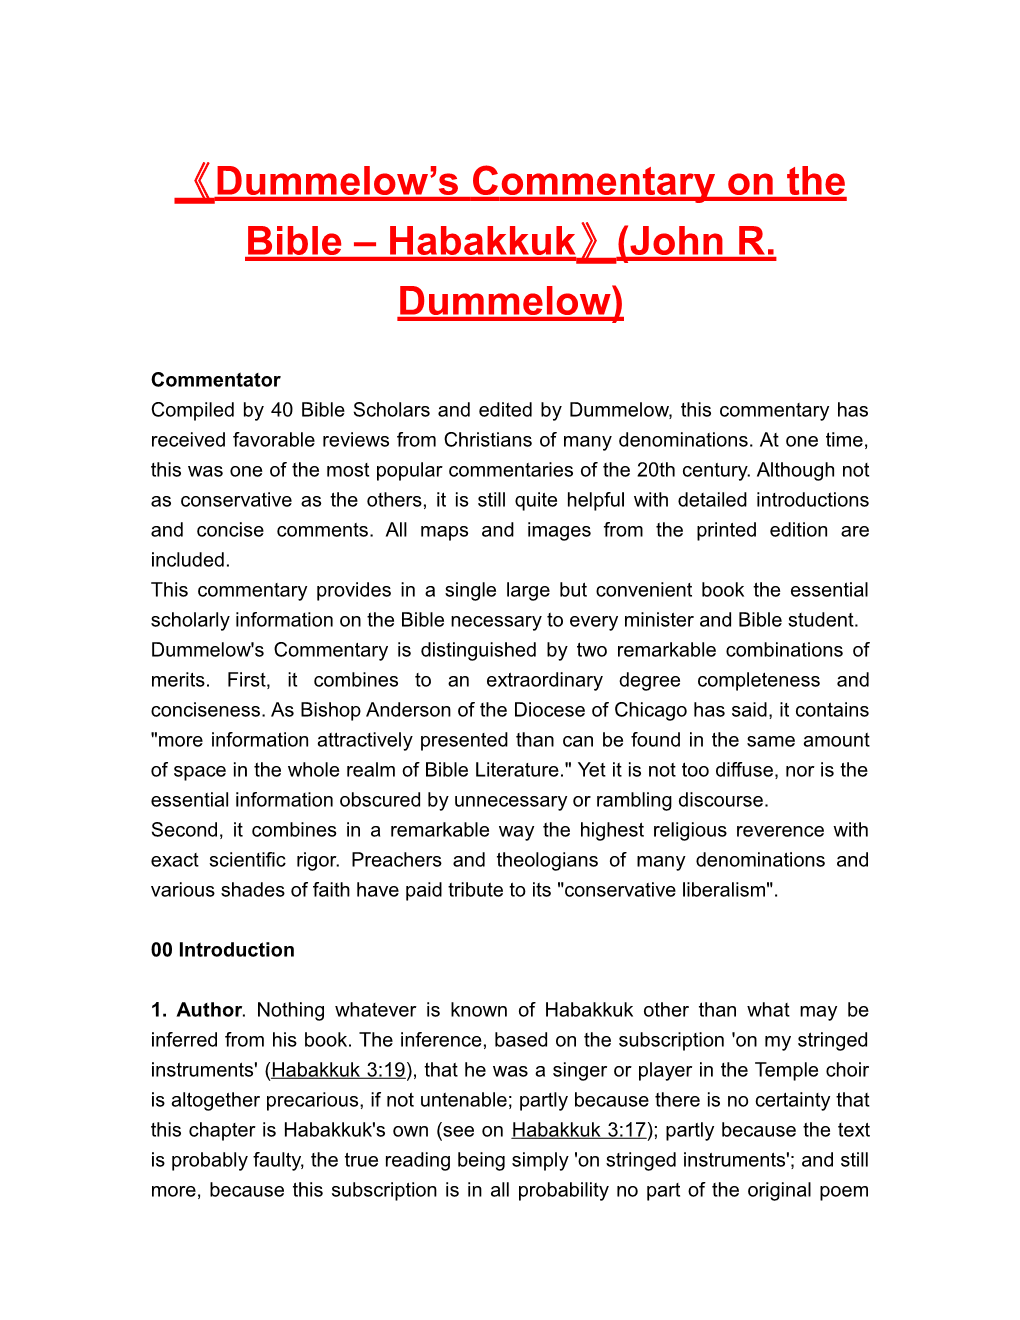 Dummelow Scommentaryon the Bible Habakkuk (John R. Dummelow)